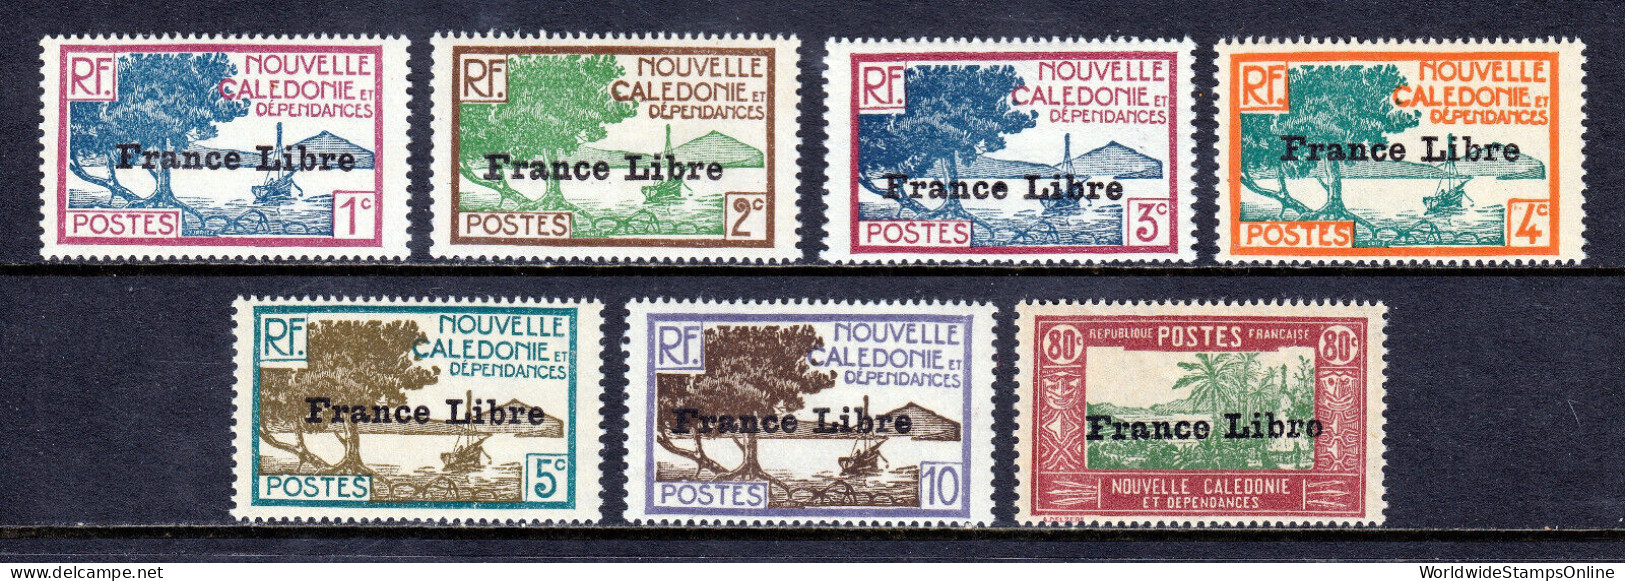 NEW CALEDONIA — SCOTT 217/236  — 1941 FRANCE LIBRE ISSUE — MH — SCV $99 - Nuevos